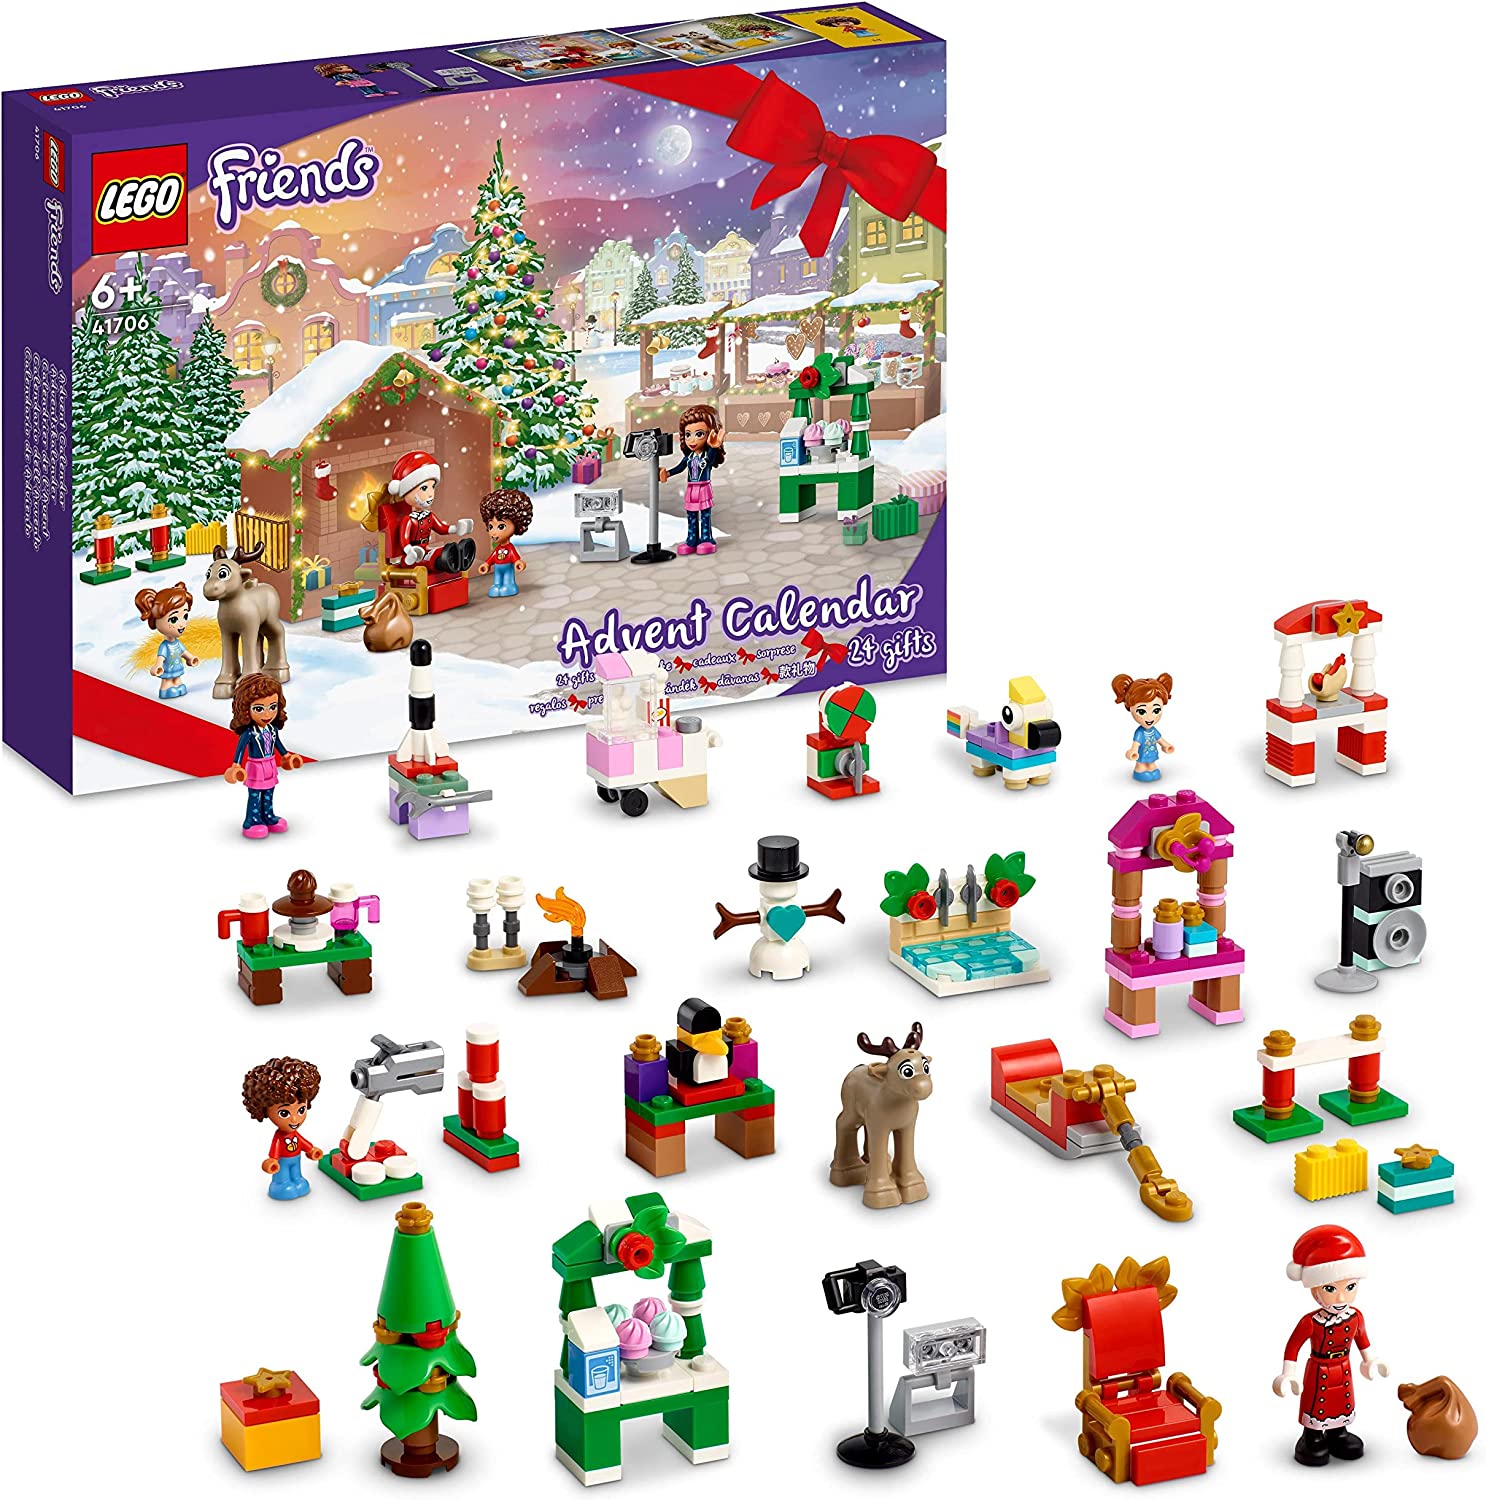 LEGO 41706 Friends Advent Calendar 2022, 24 Christmas Toys Including Santa, Snowman and Reindeer Figure, Christmas Gift for Children